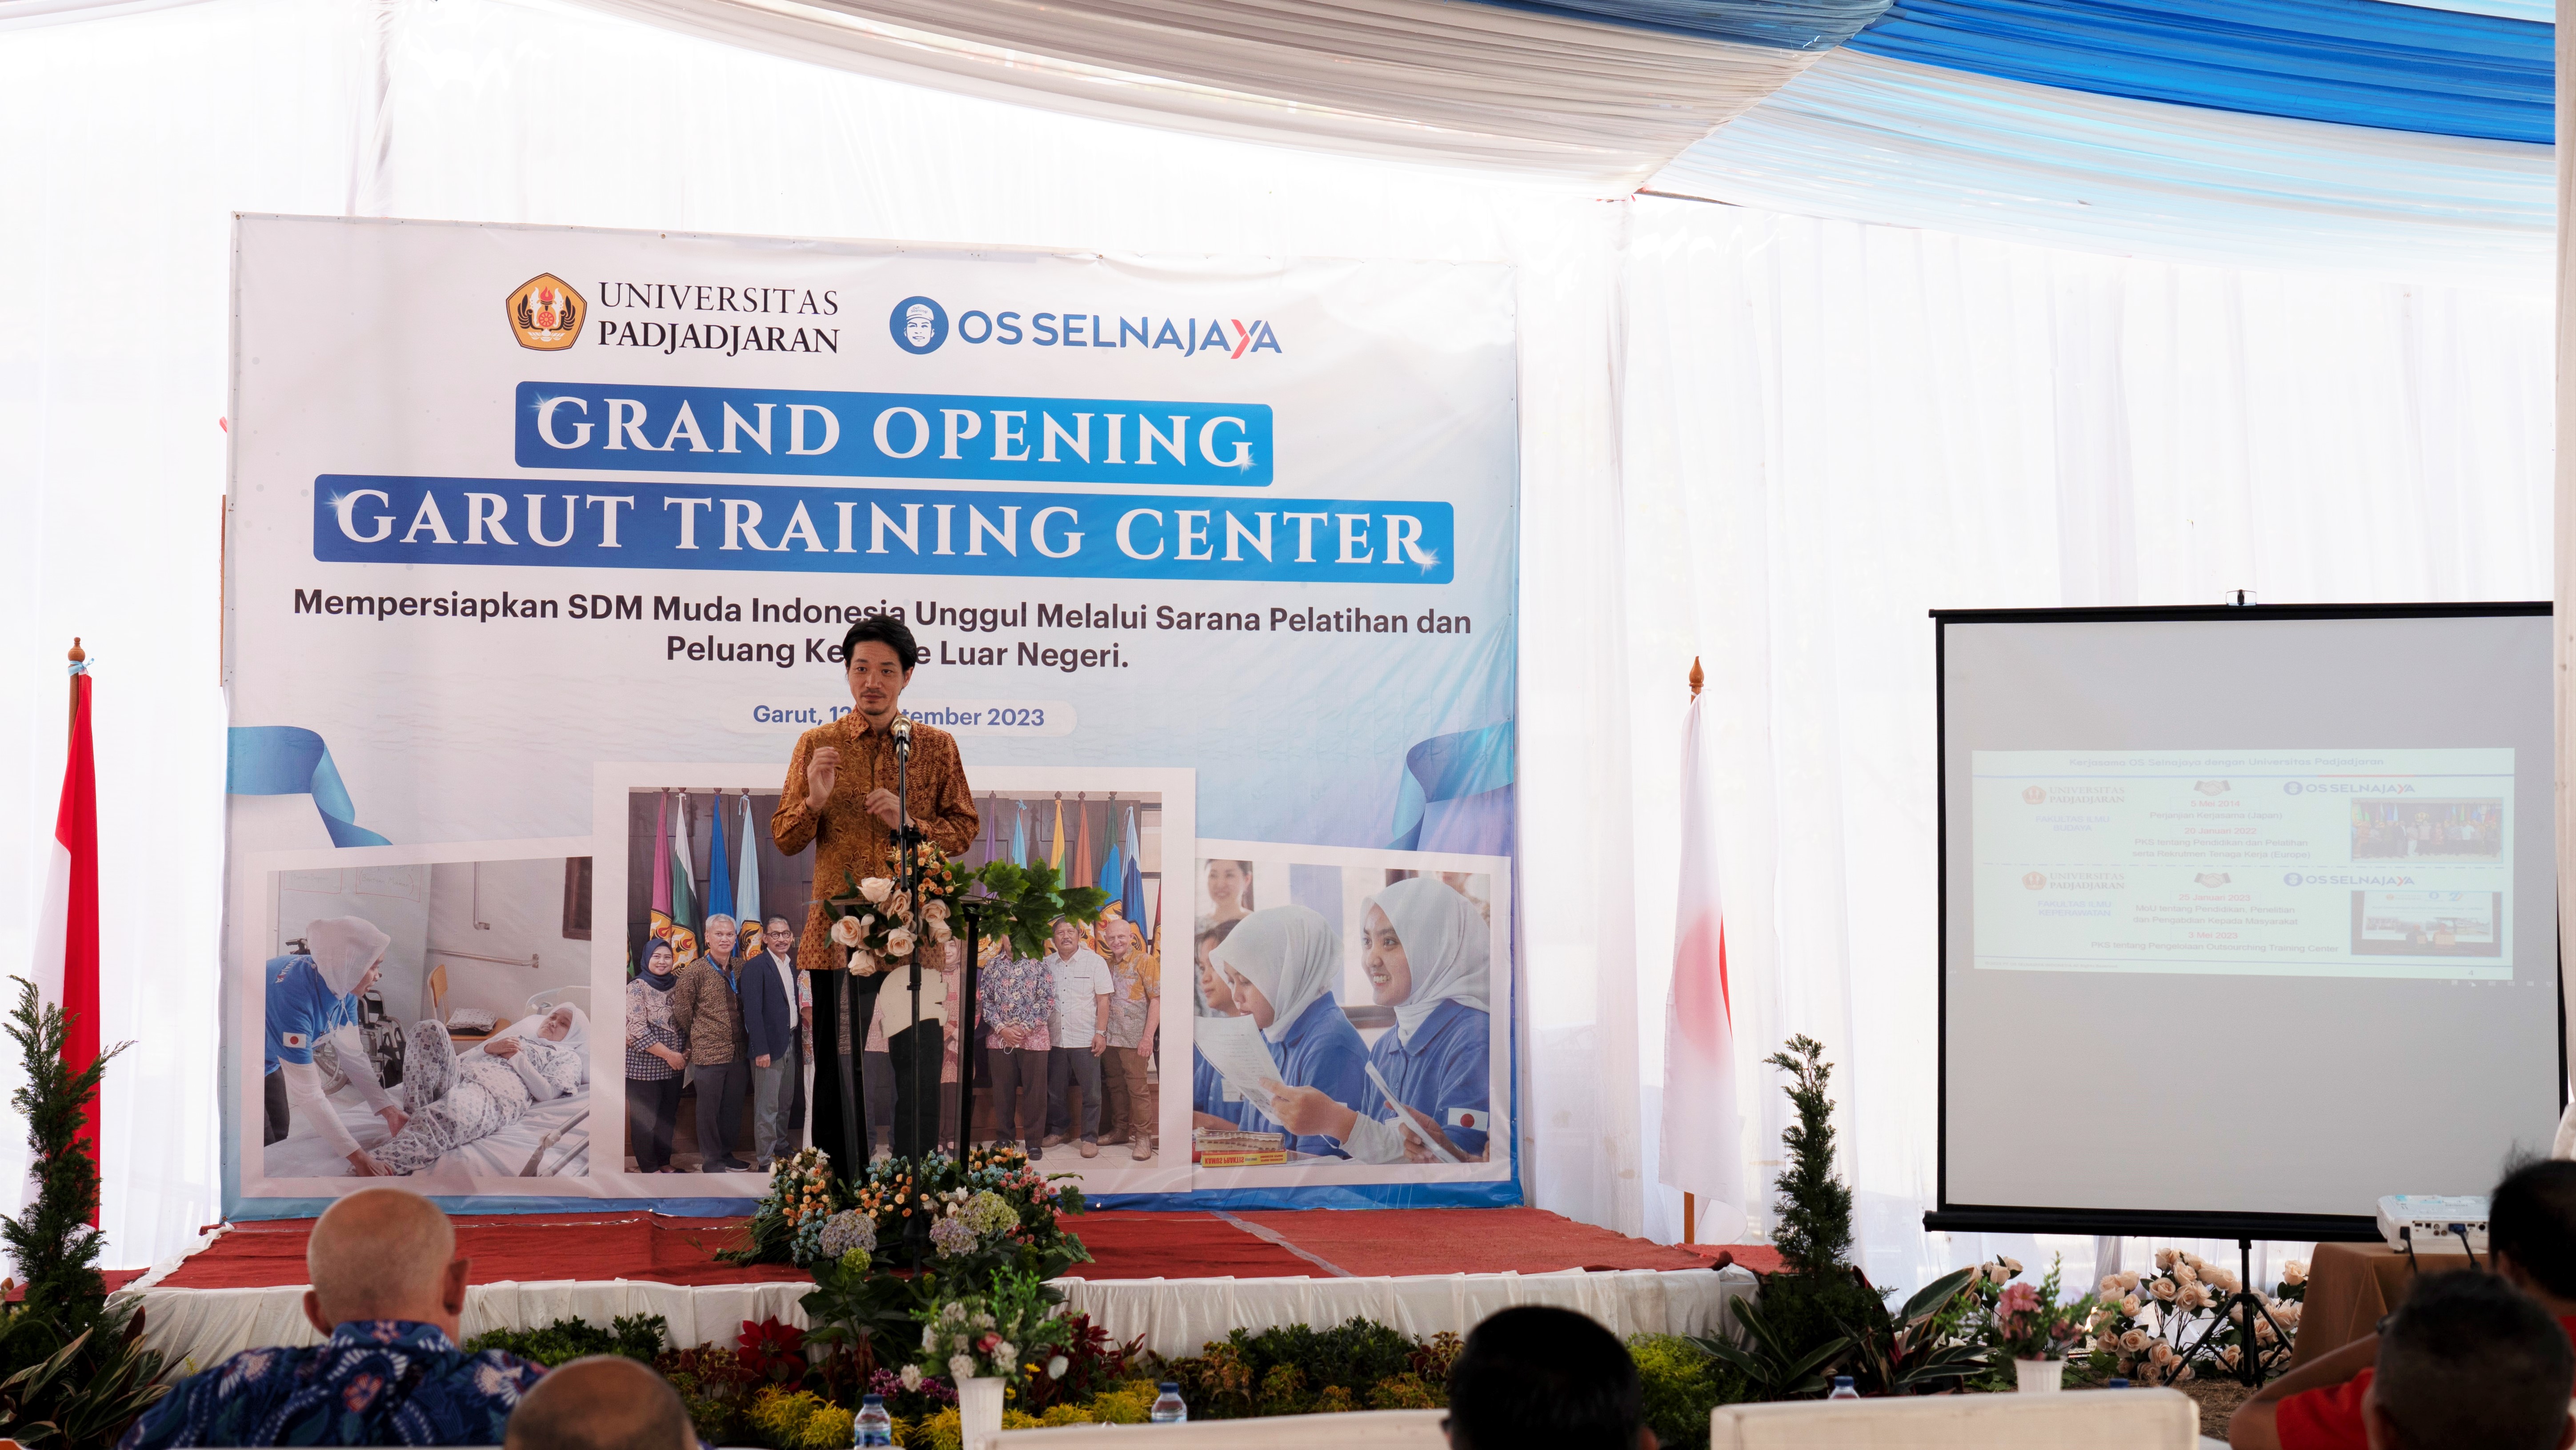 Presiden Direkrur PT OS Selnajaya Indonesia, Satoshi Miyajima, saat memberikan sambutan di acara Grang Opening Garut Training Center.